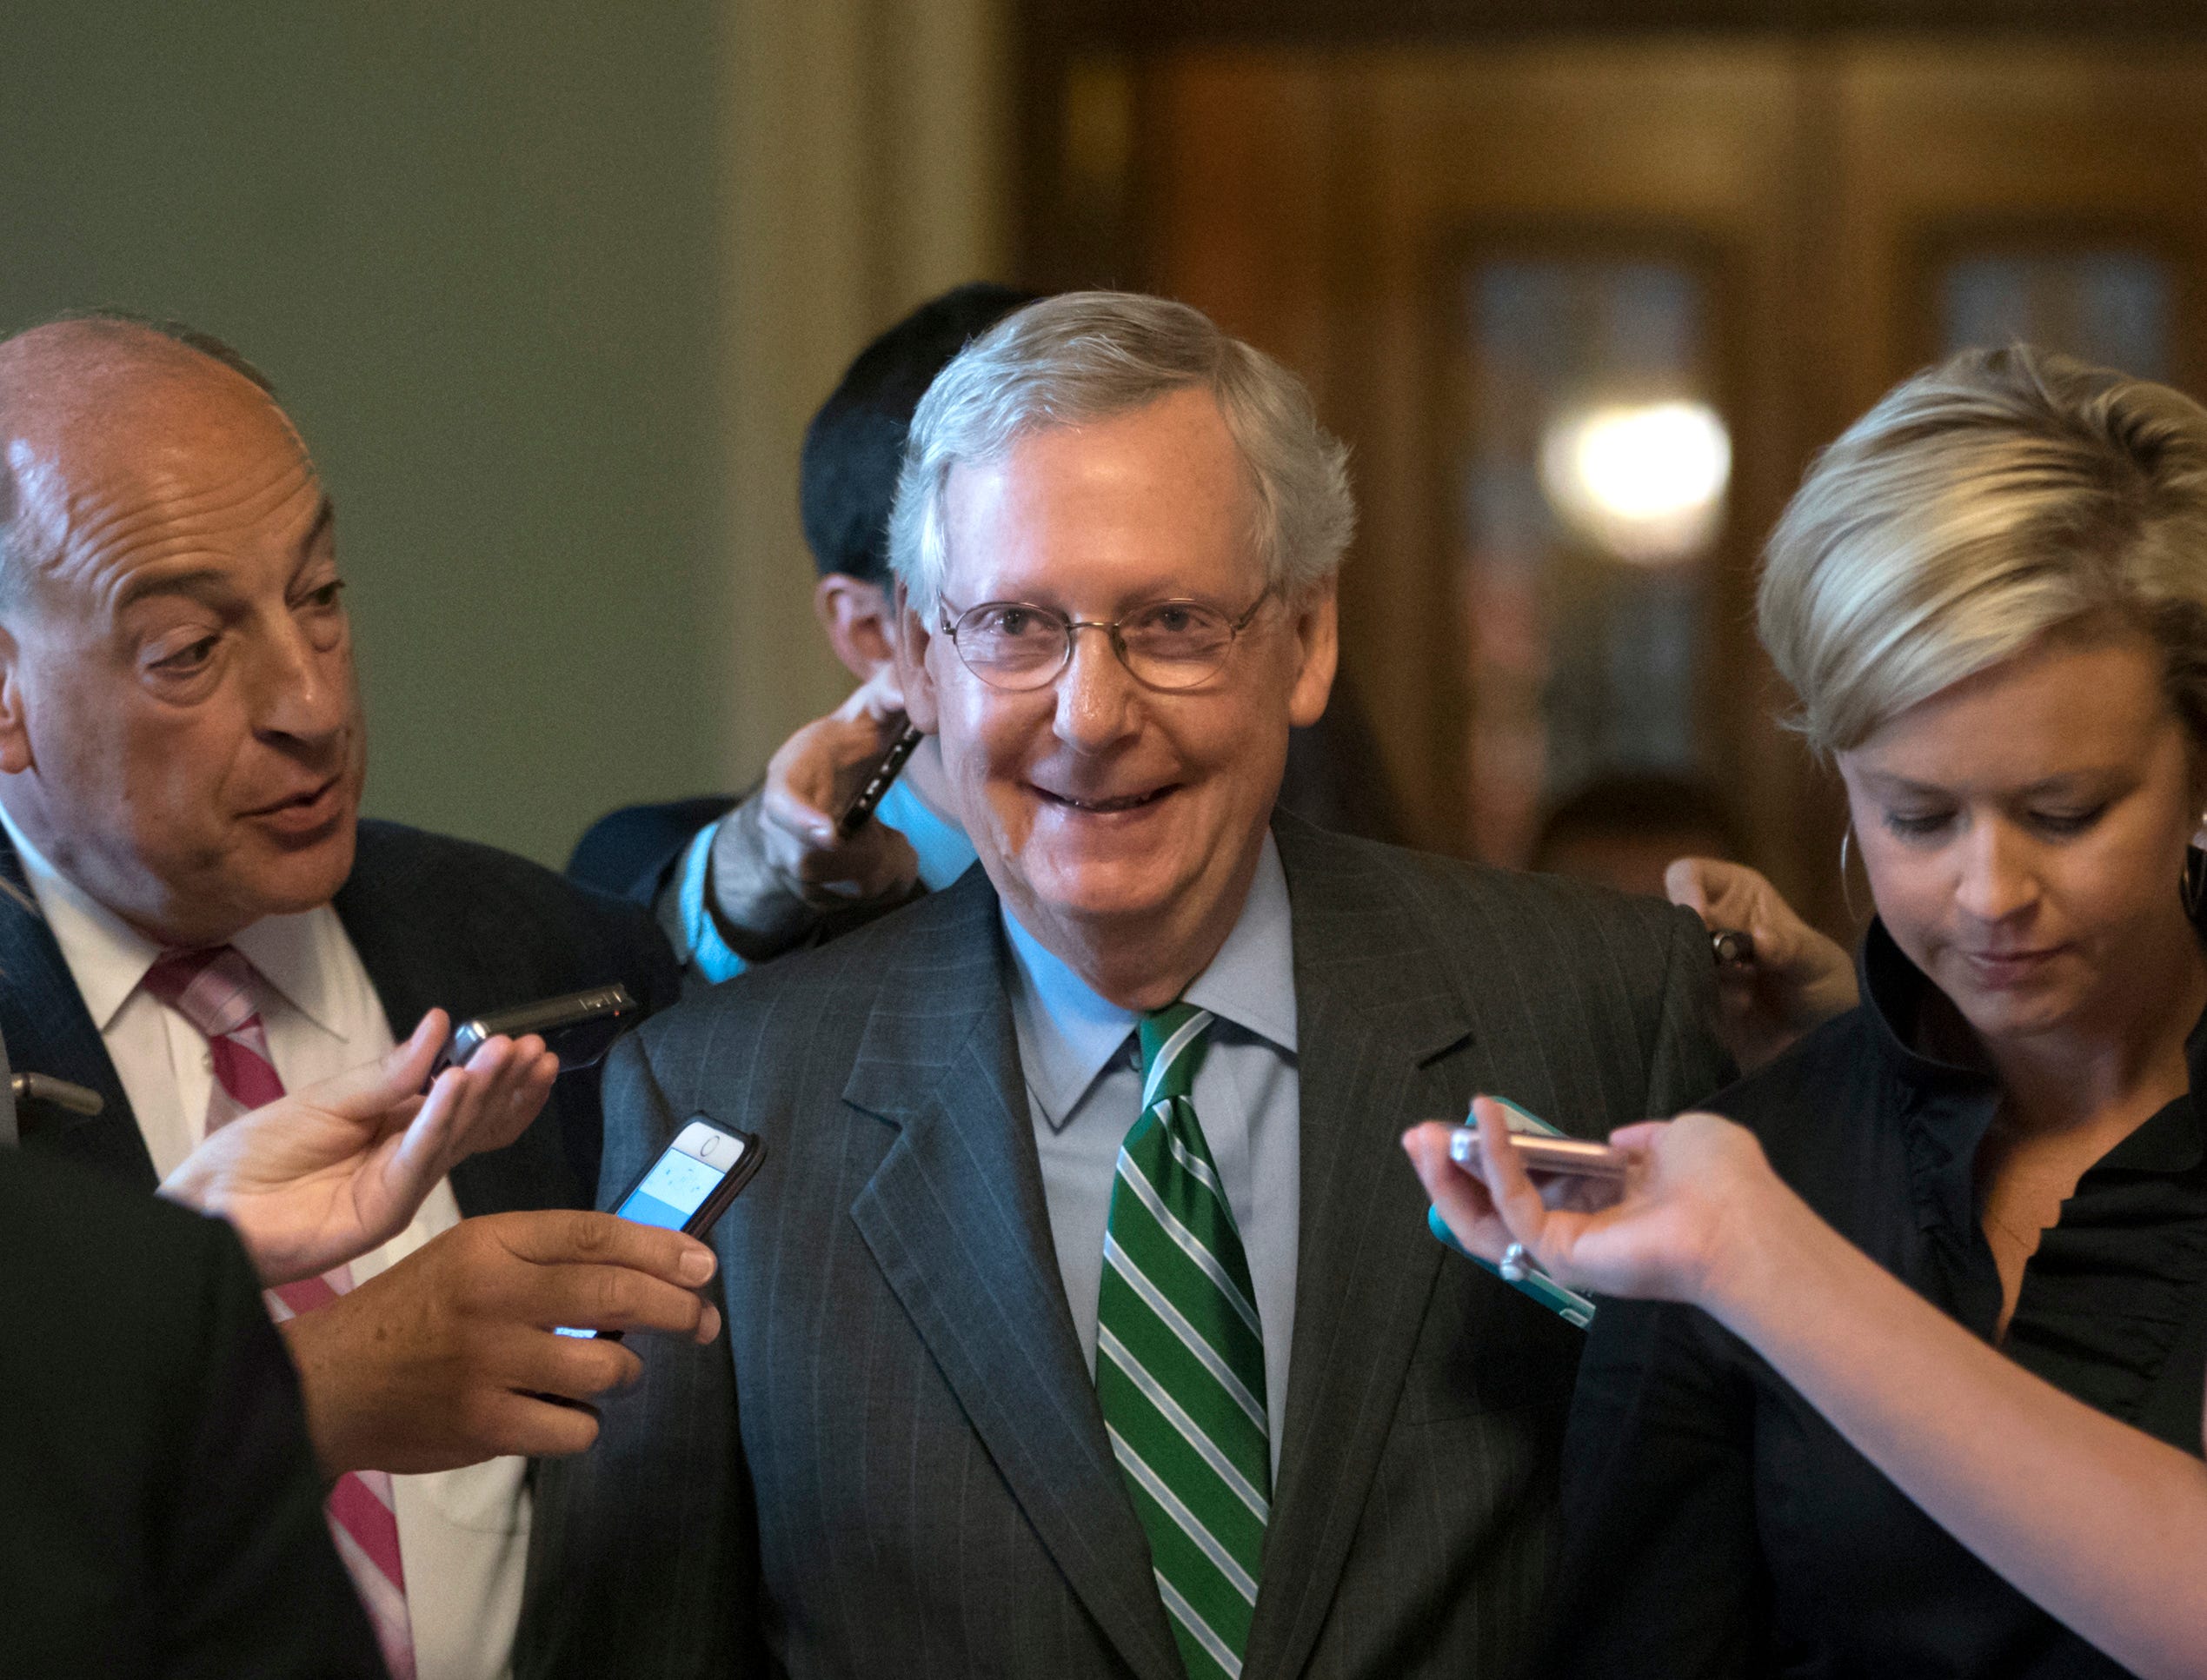 Senate health care bill analysis: Despite risk, Republicans don't have a choice